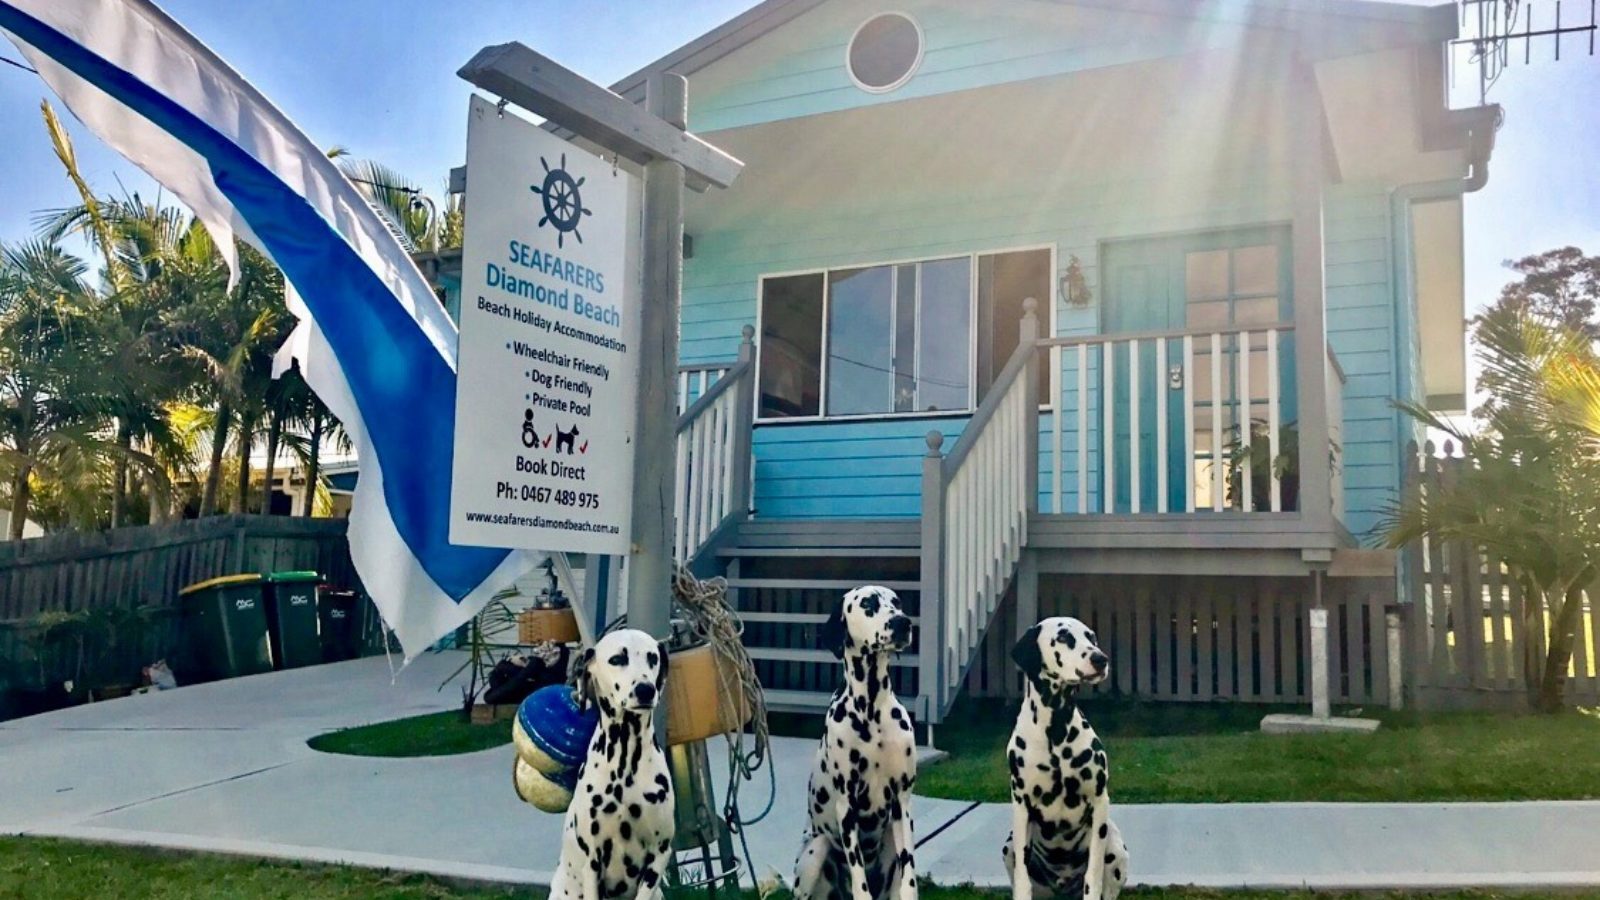 Seafarers Diamond Beach NSW dog friendly accommodation